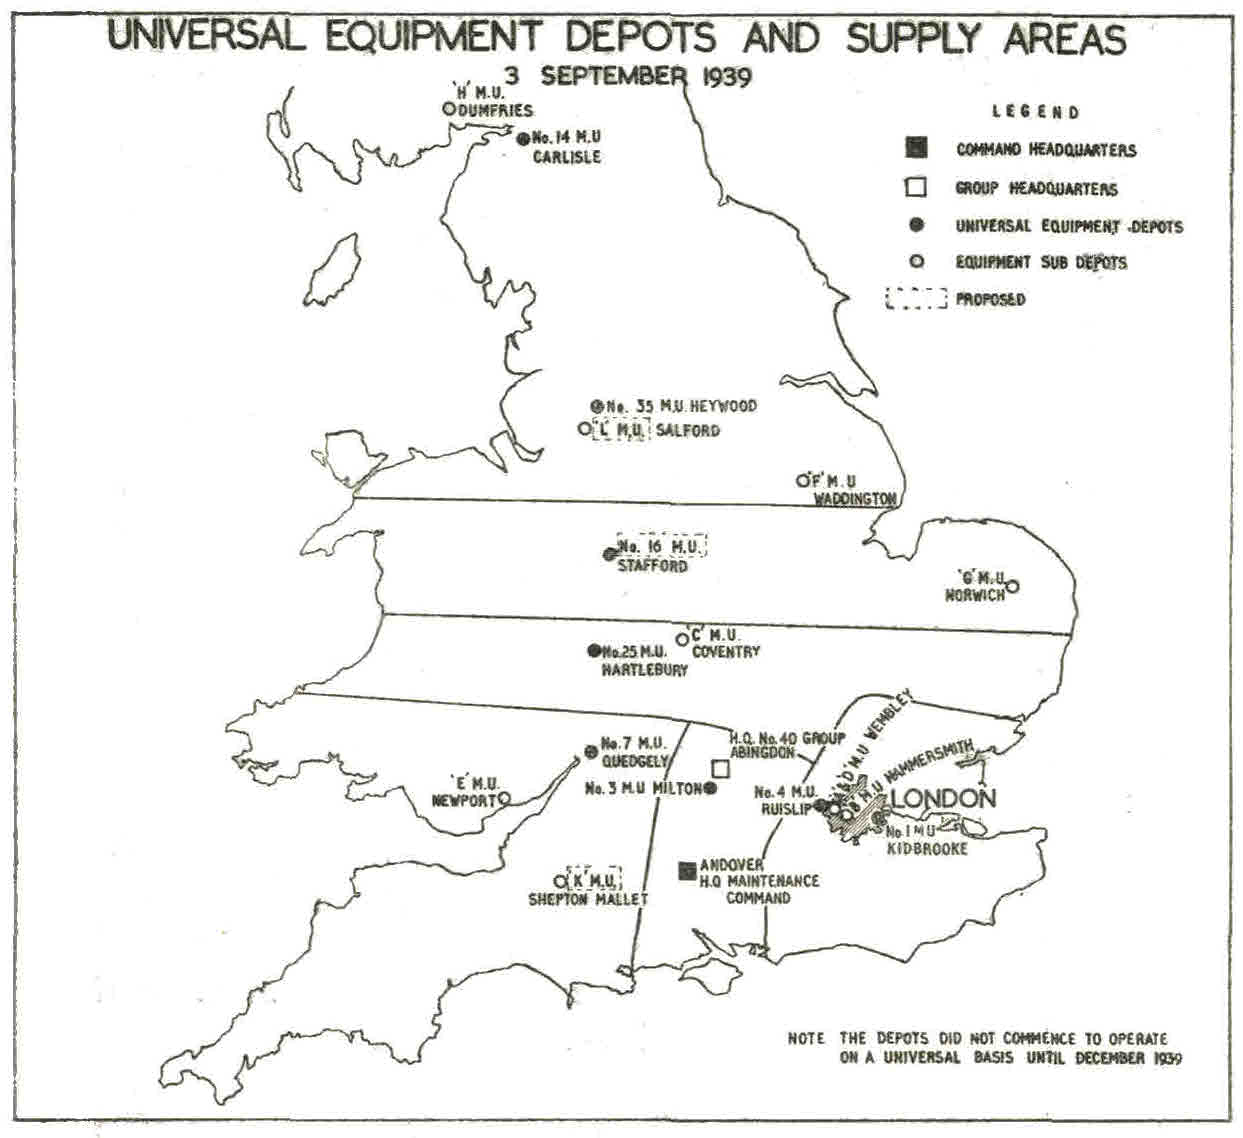 Universal Equipment Depots - September 1939